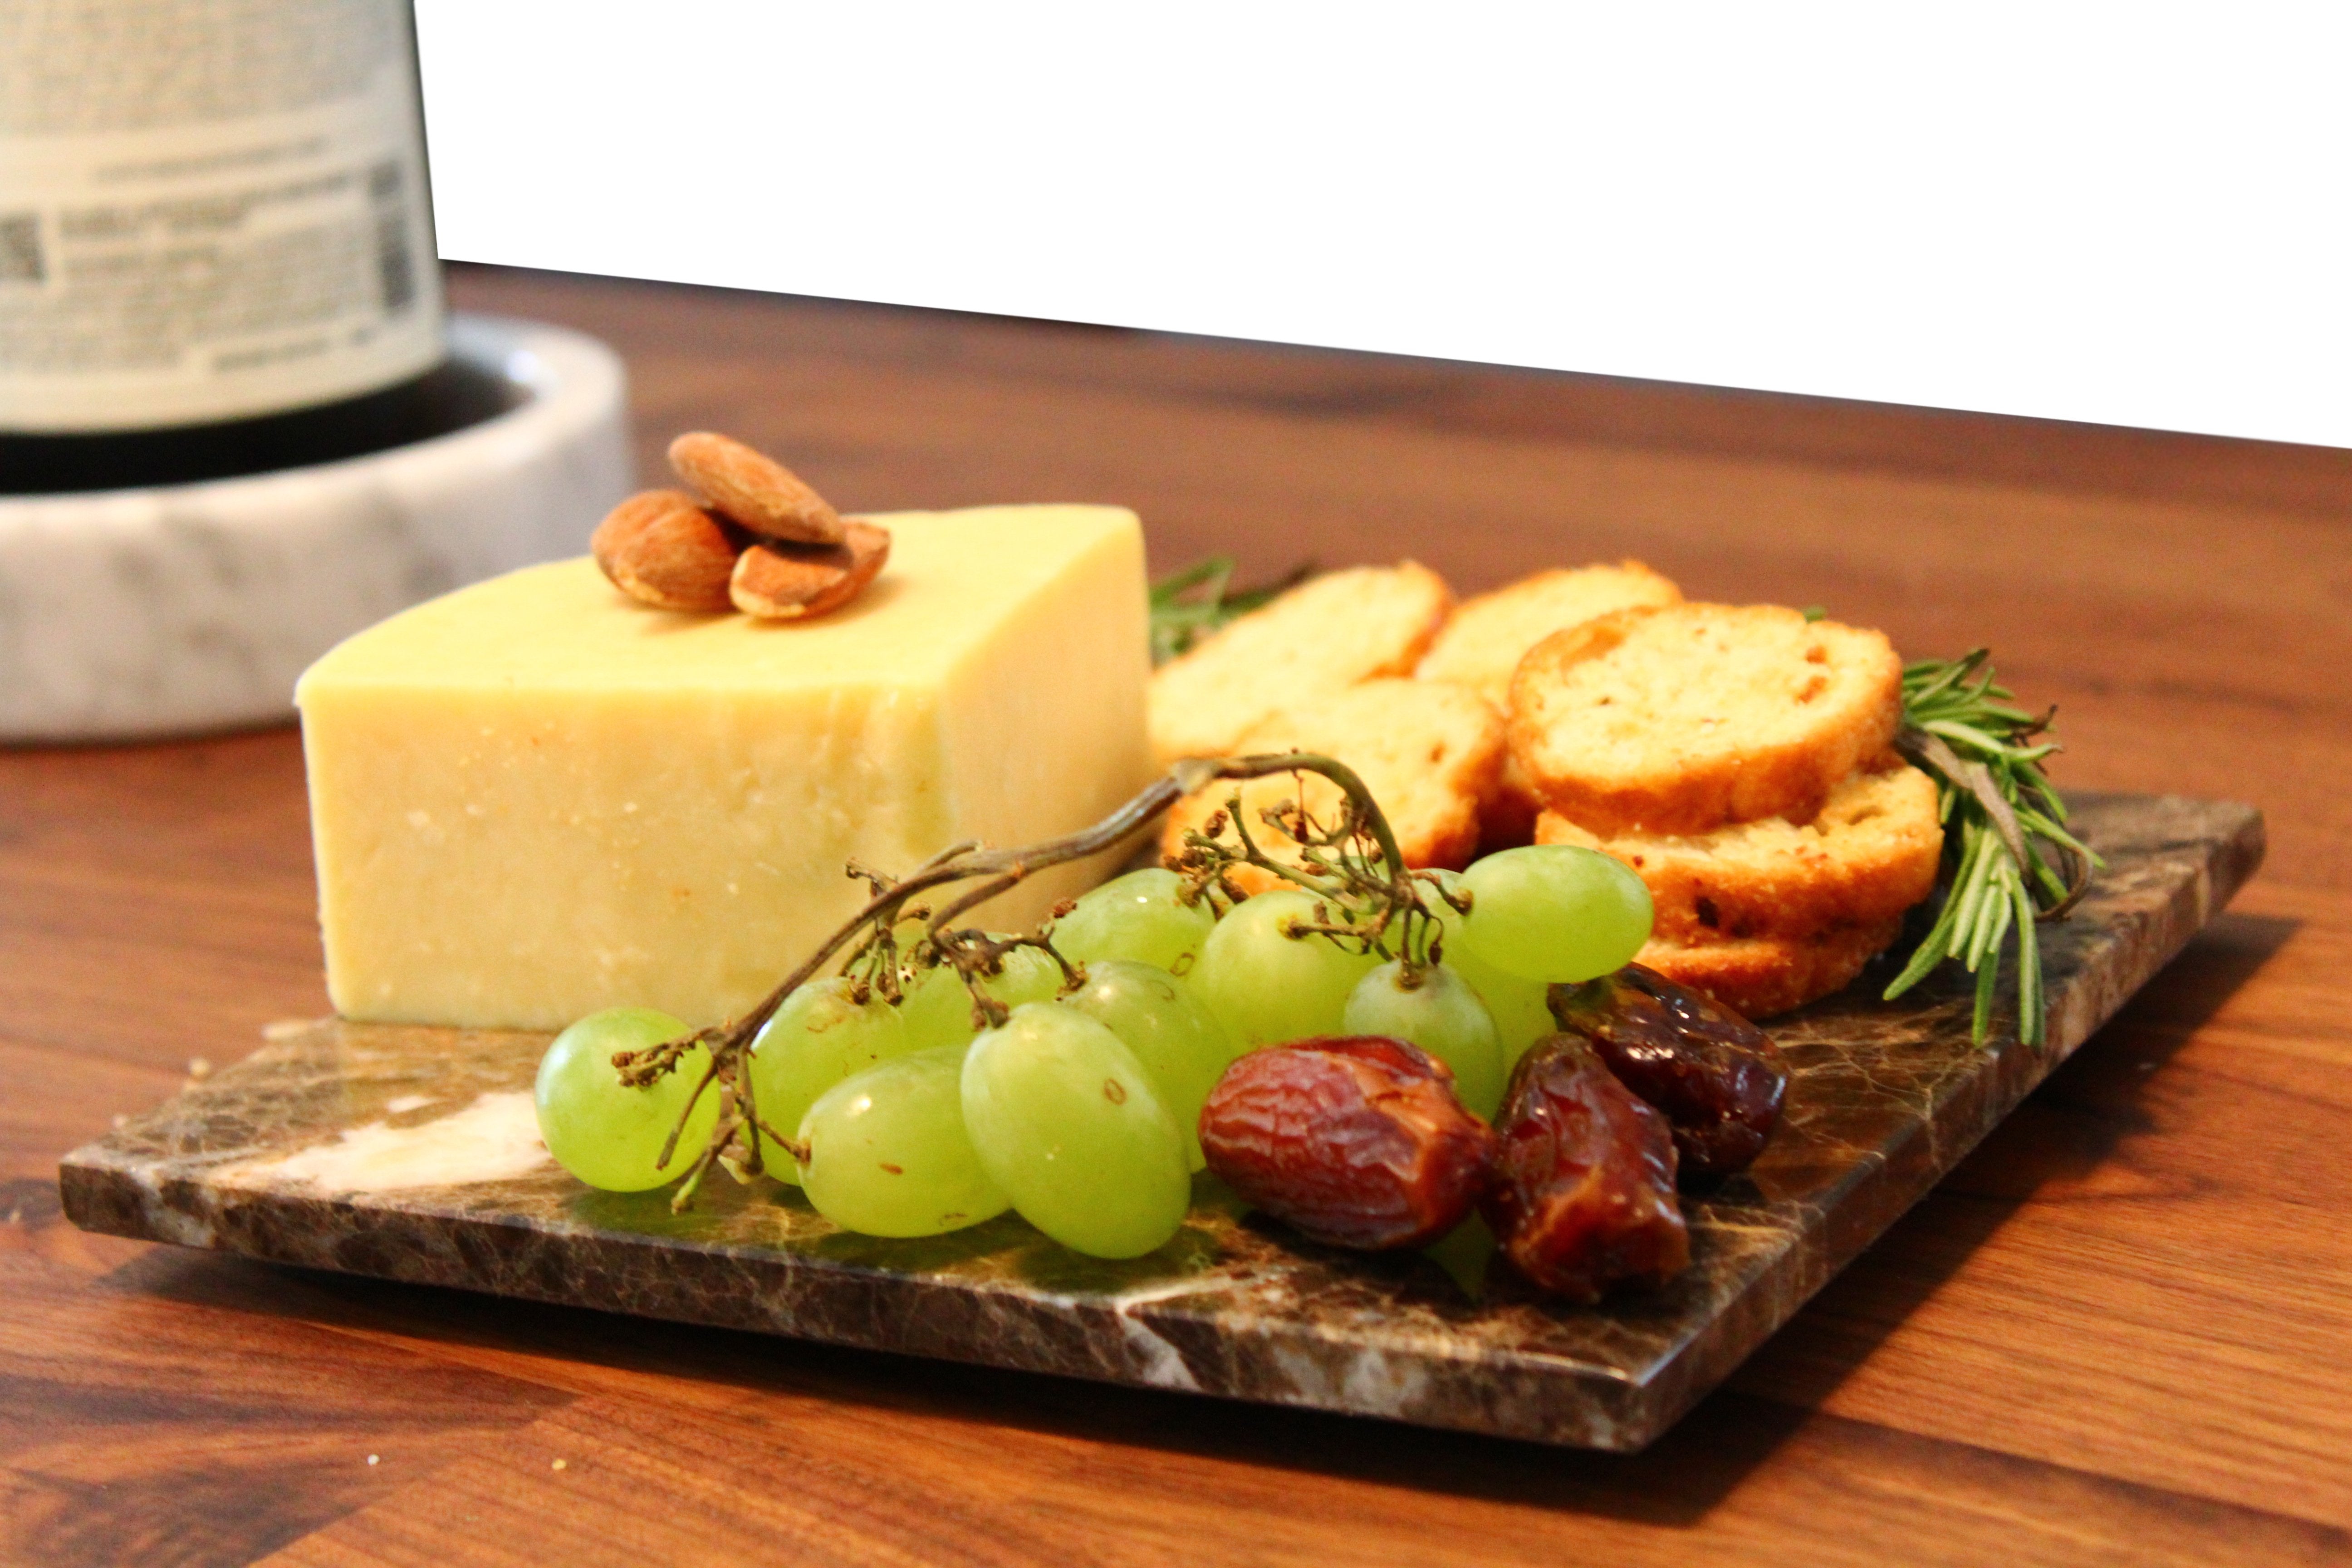 Small Cheese/Cutting Board